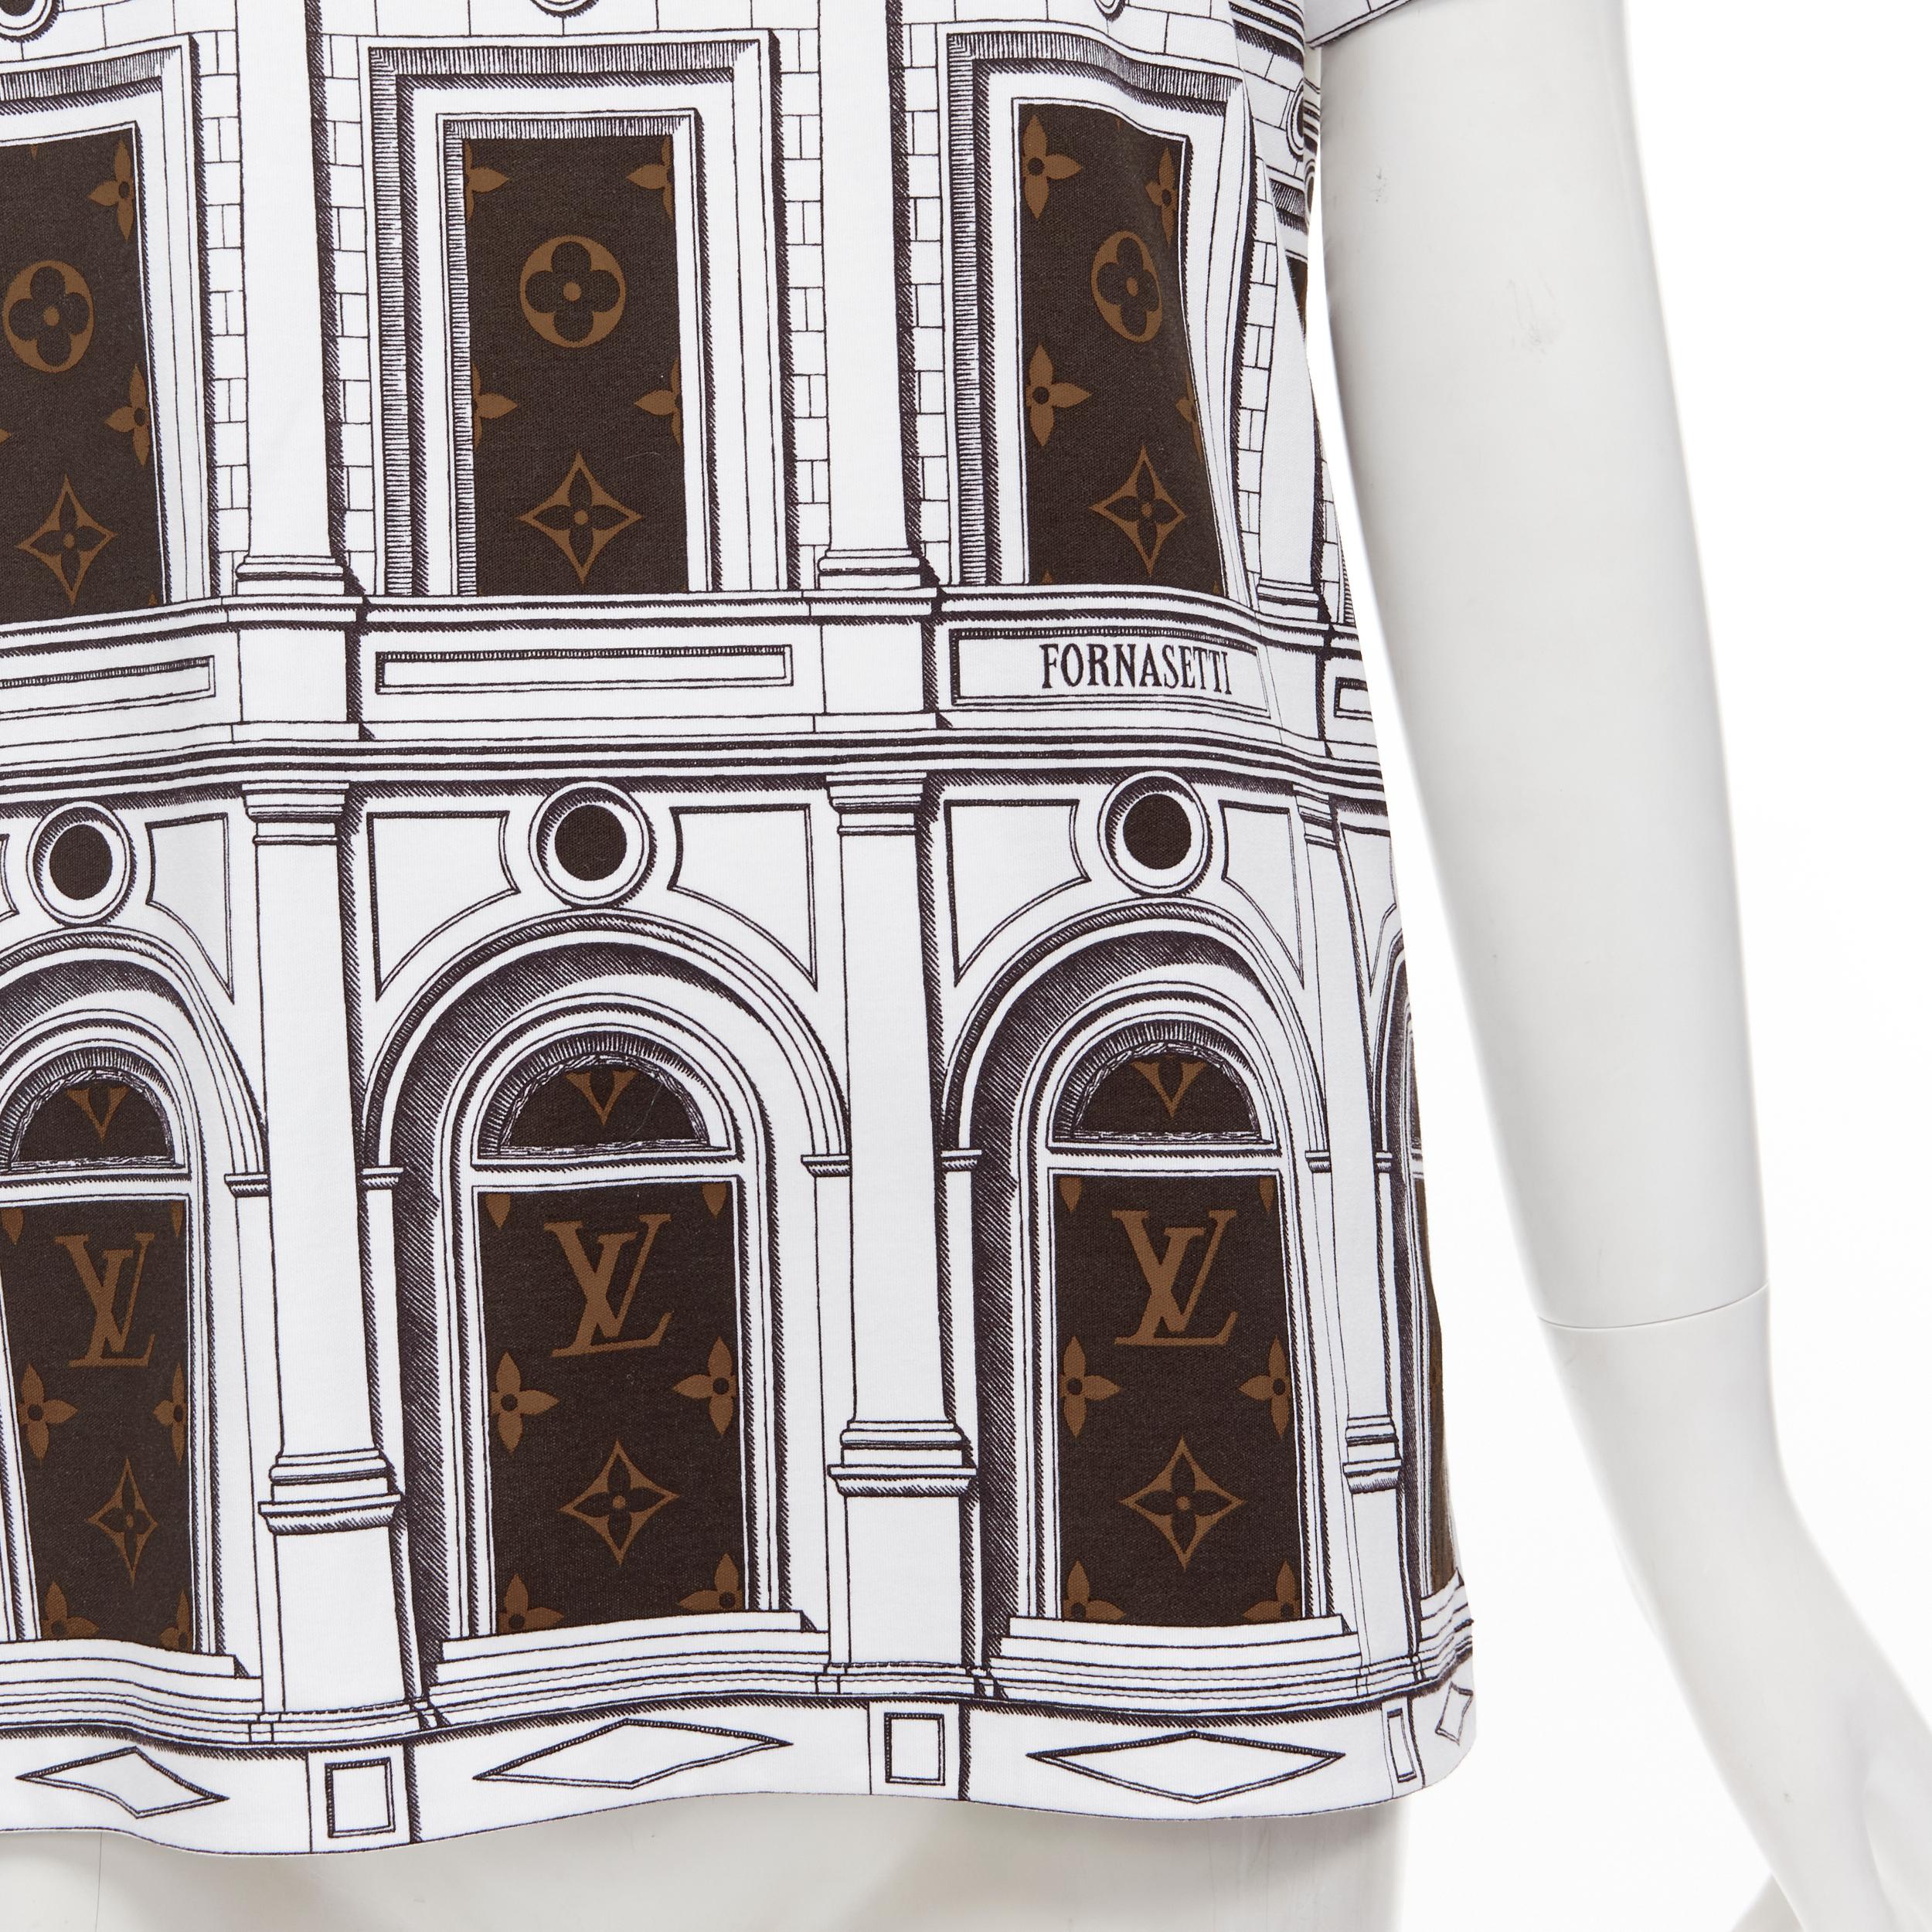 LOUIS VUITTON FORNASETTI 2021 Architettura LV monogram print cotton tshirt XS 1